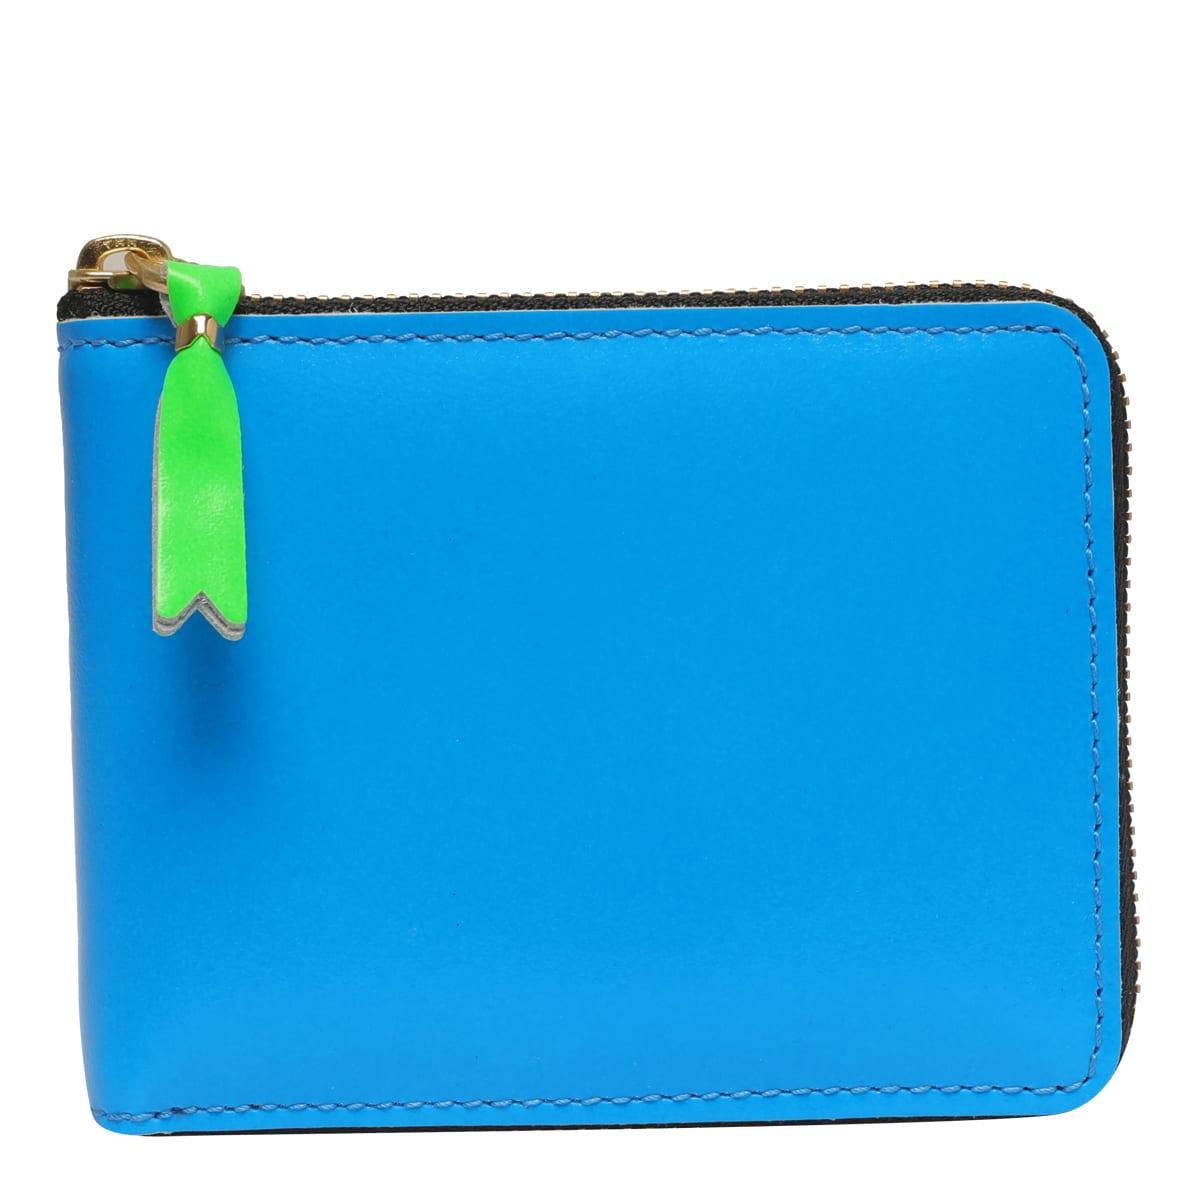 Comme des Garçons Super Fluo Leather Line Wallet in Blue | Lyst